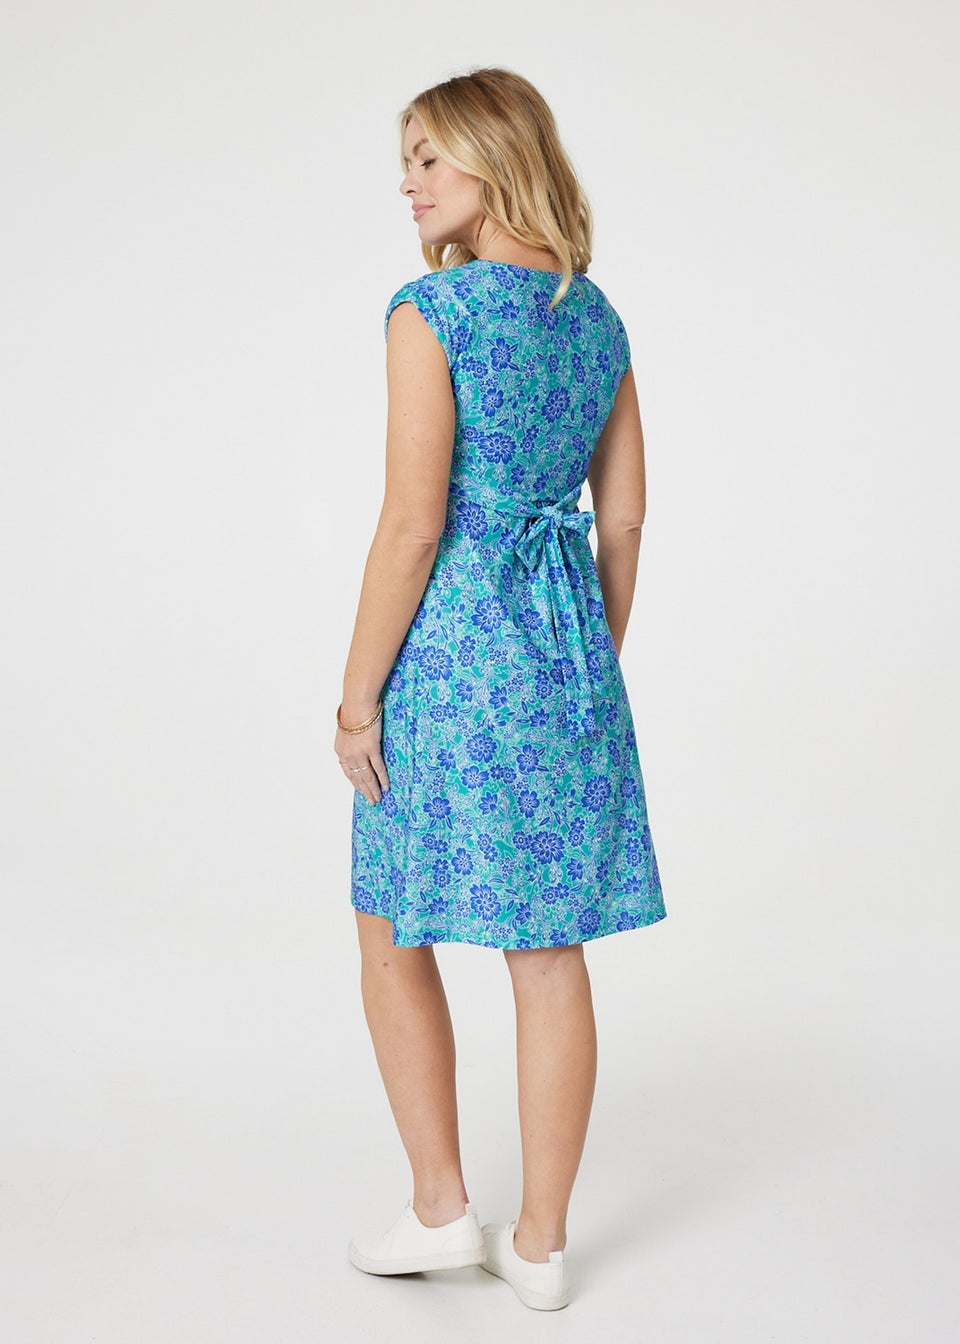 Izabel London Green Floral Tie Front Sleeveless Tunic Dress